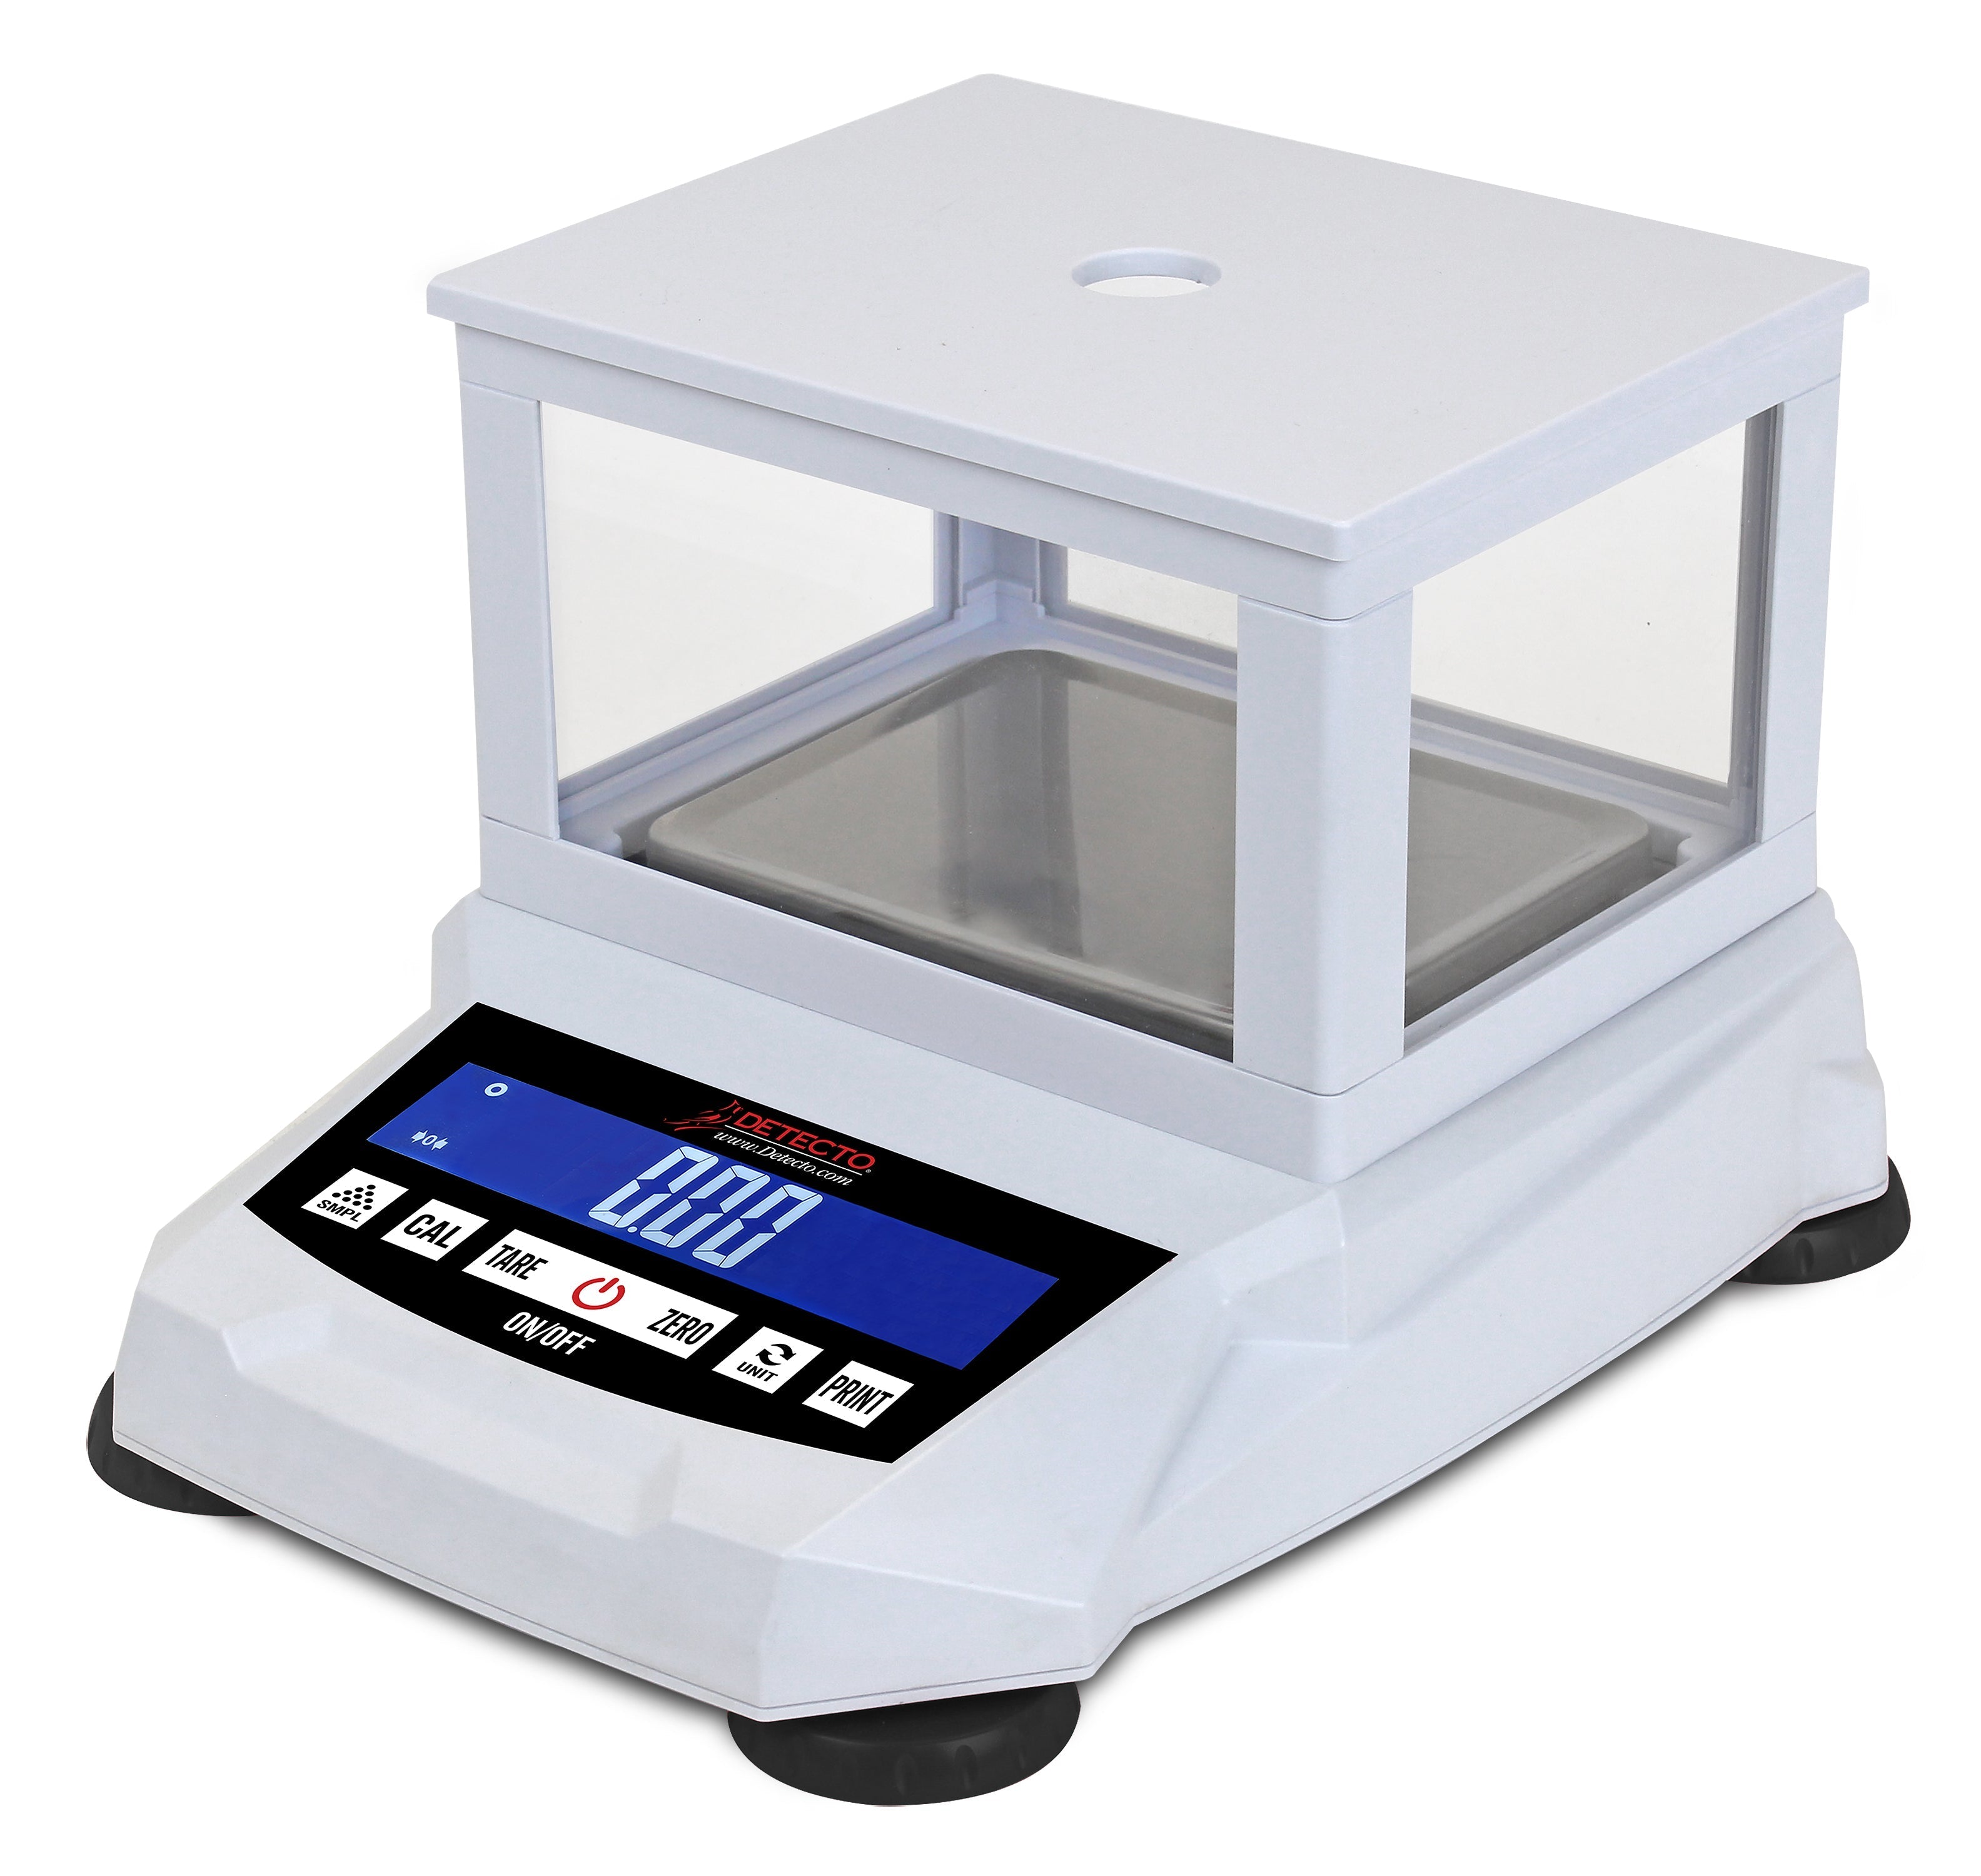 Detecto 420-2000 Digital Precision Balance Scale, 2000 g x 0.02 g, 5.7 in W x 4.5 in D Platform